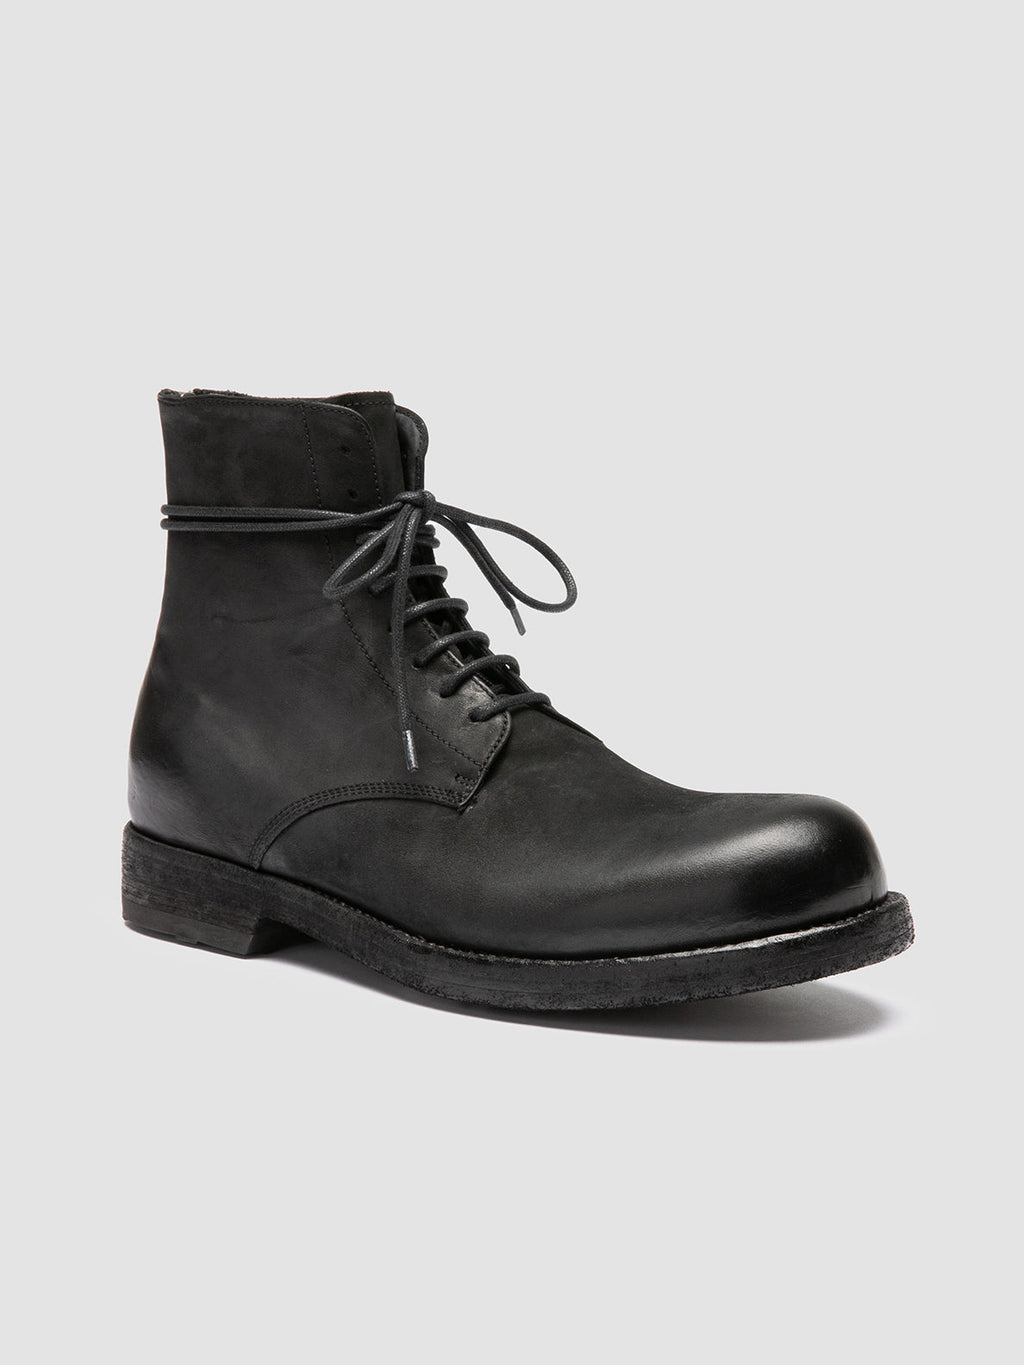 BULLA DD 102 - Black Leather Lace-up Boots Men Officine Creative - 3